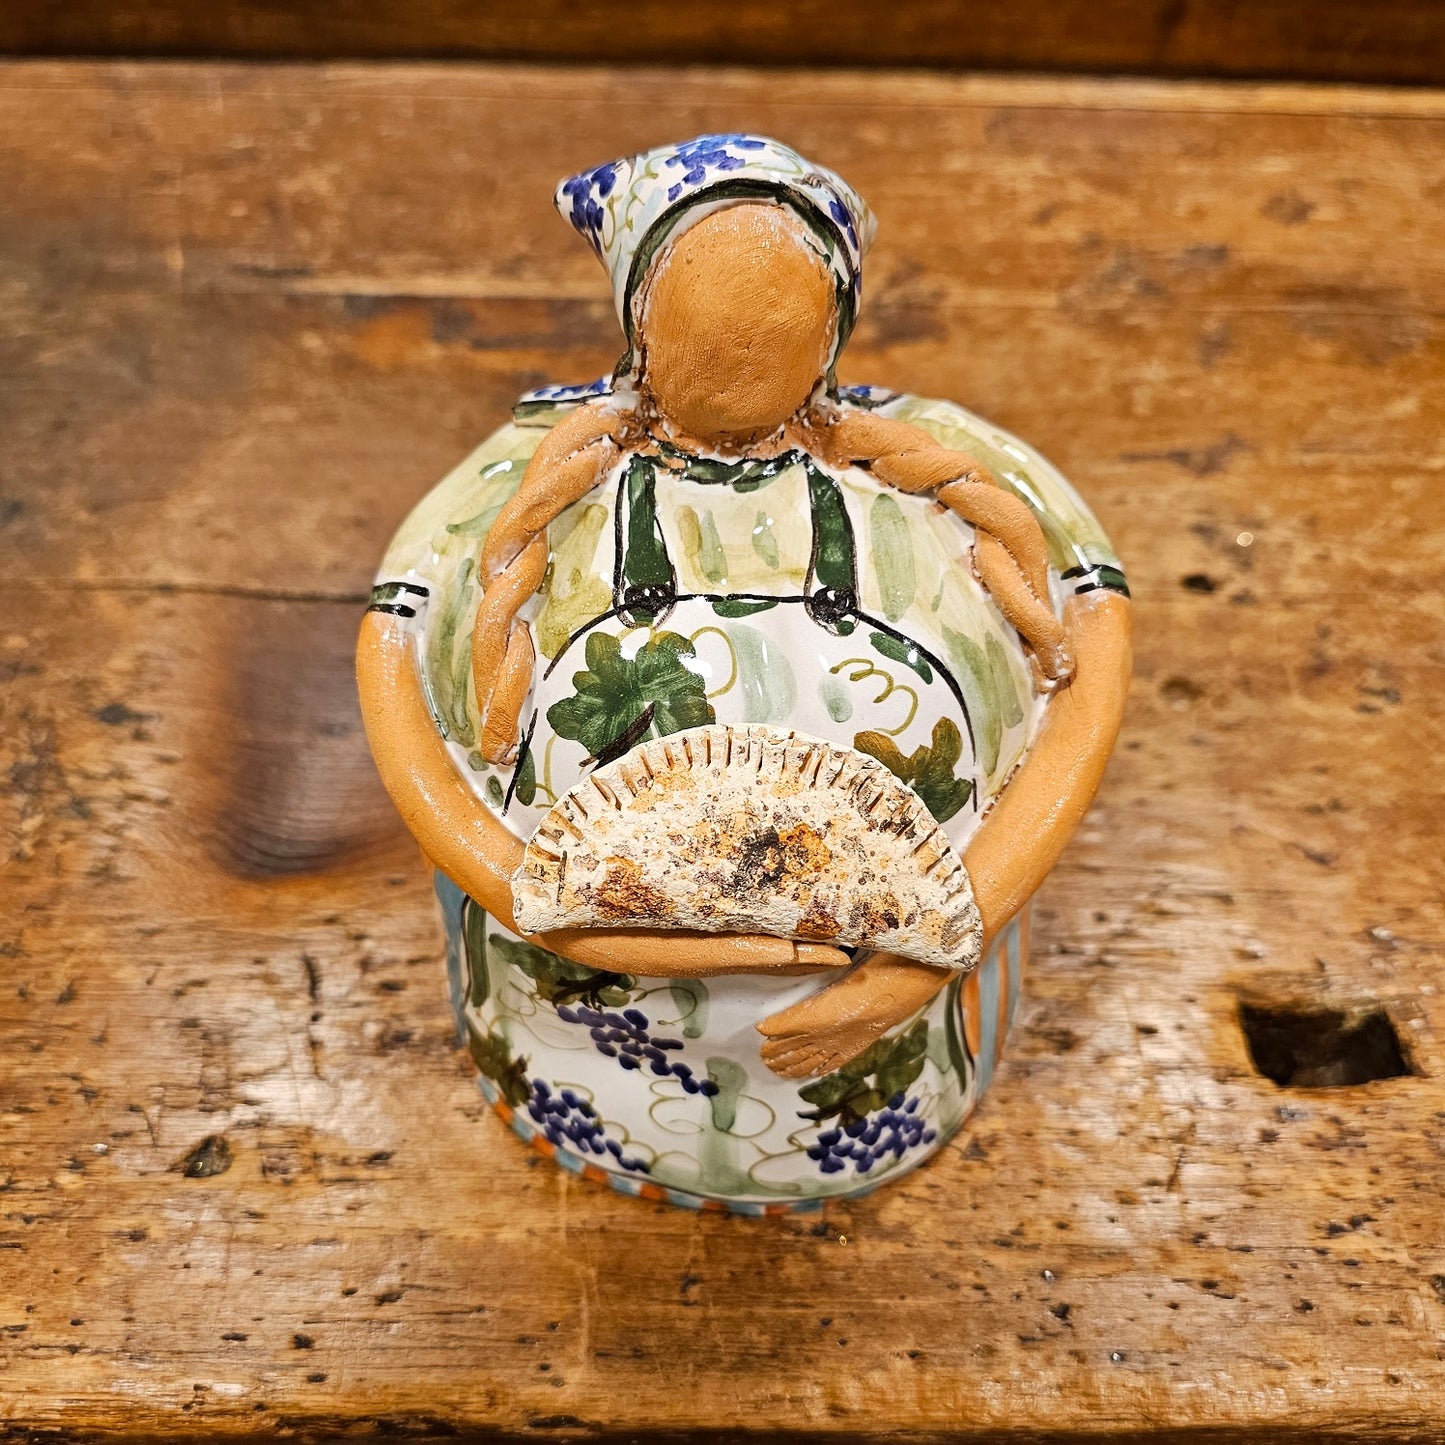 Azdore Romagna giants in hand-decorated ceramic